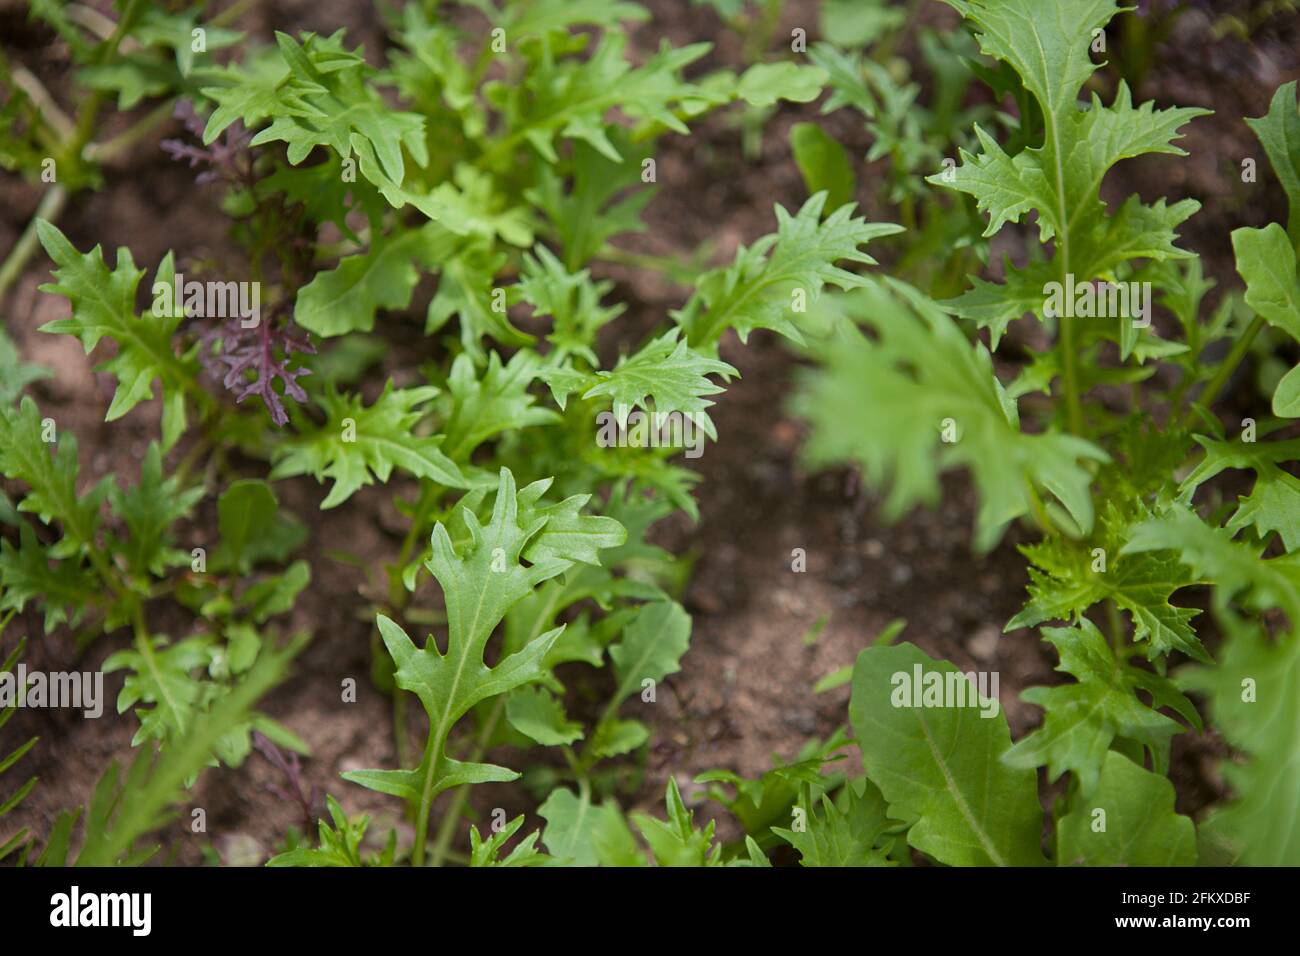 Salad leaves / leaf vegetables growing in soil in the garden, mostly rocket (arugula, Eruca vesicaria) Stock Photo